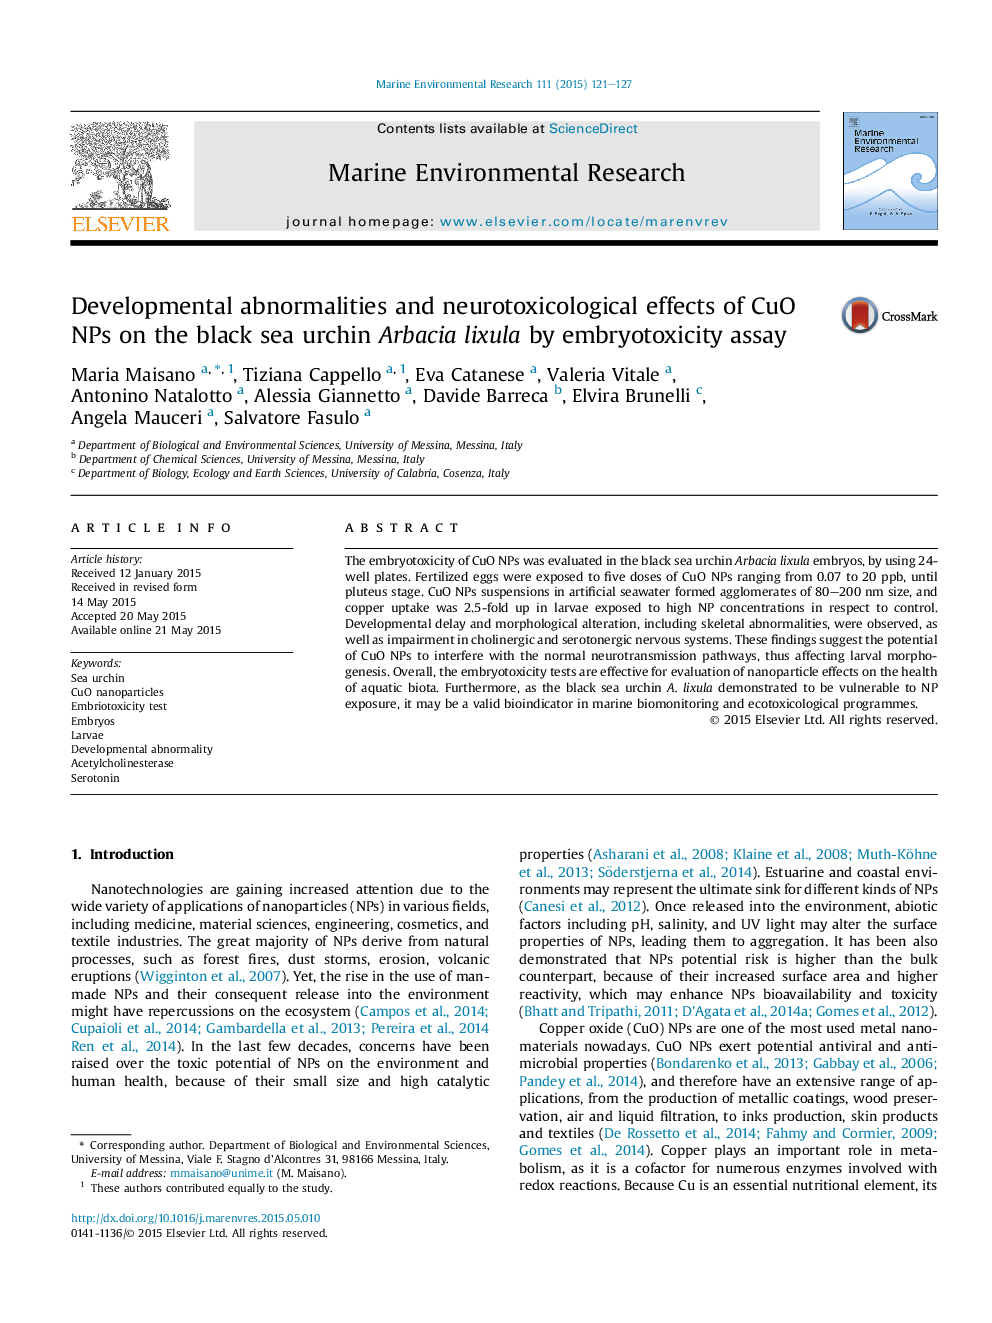 Developmental abnormalities and neurotoxicological effects of CuO NPs on the black sea urchin Arbacia lixula by embryotoxicity assay